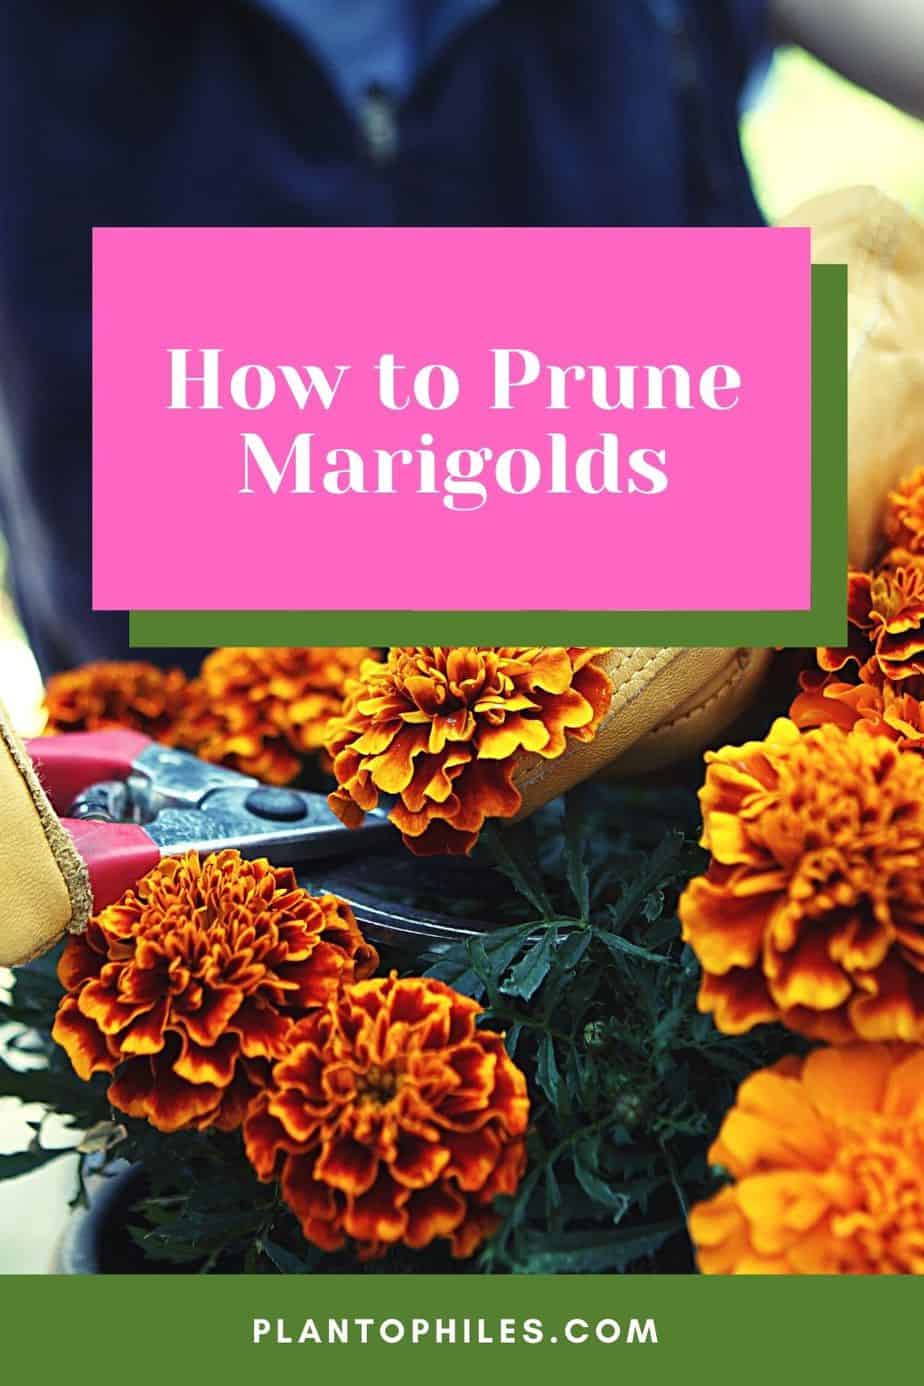 How to Prune Marigolds